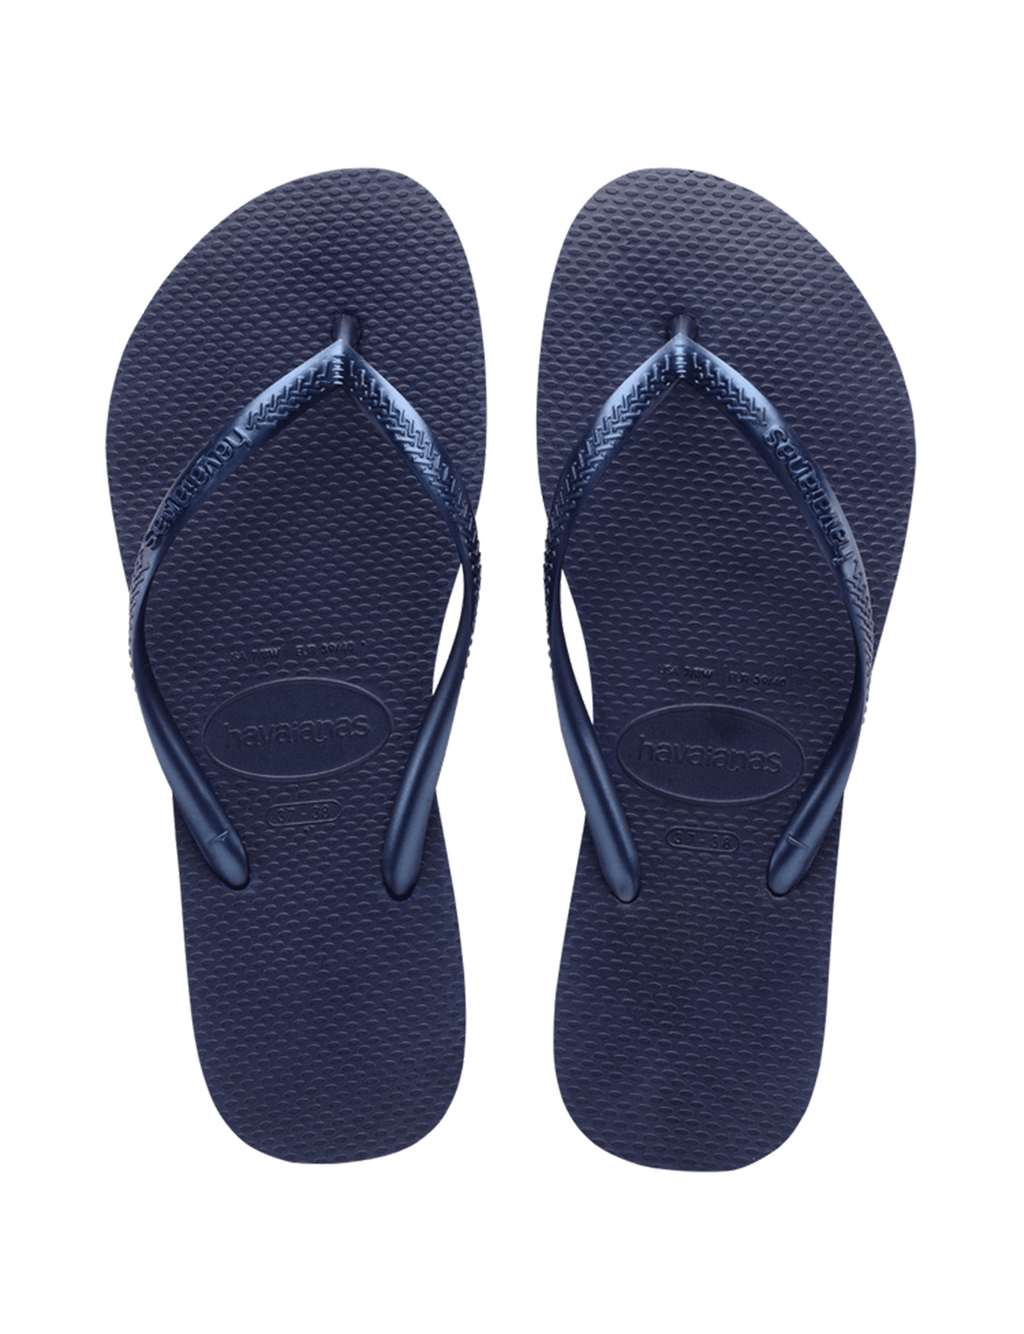 Slim Sandal in Navy Blue